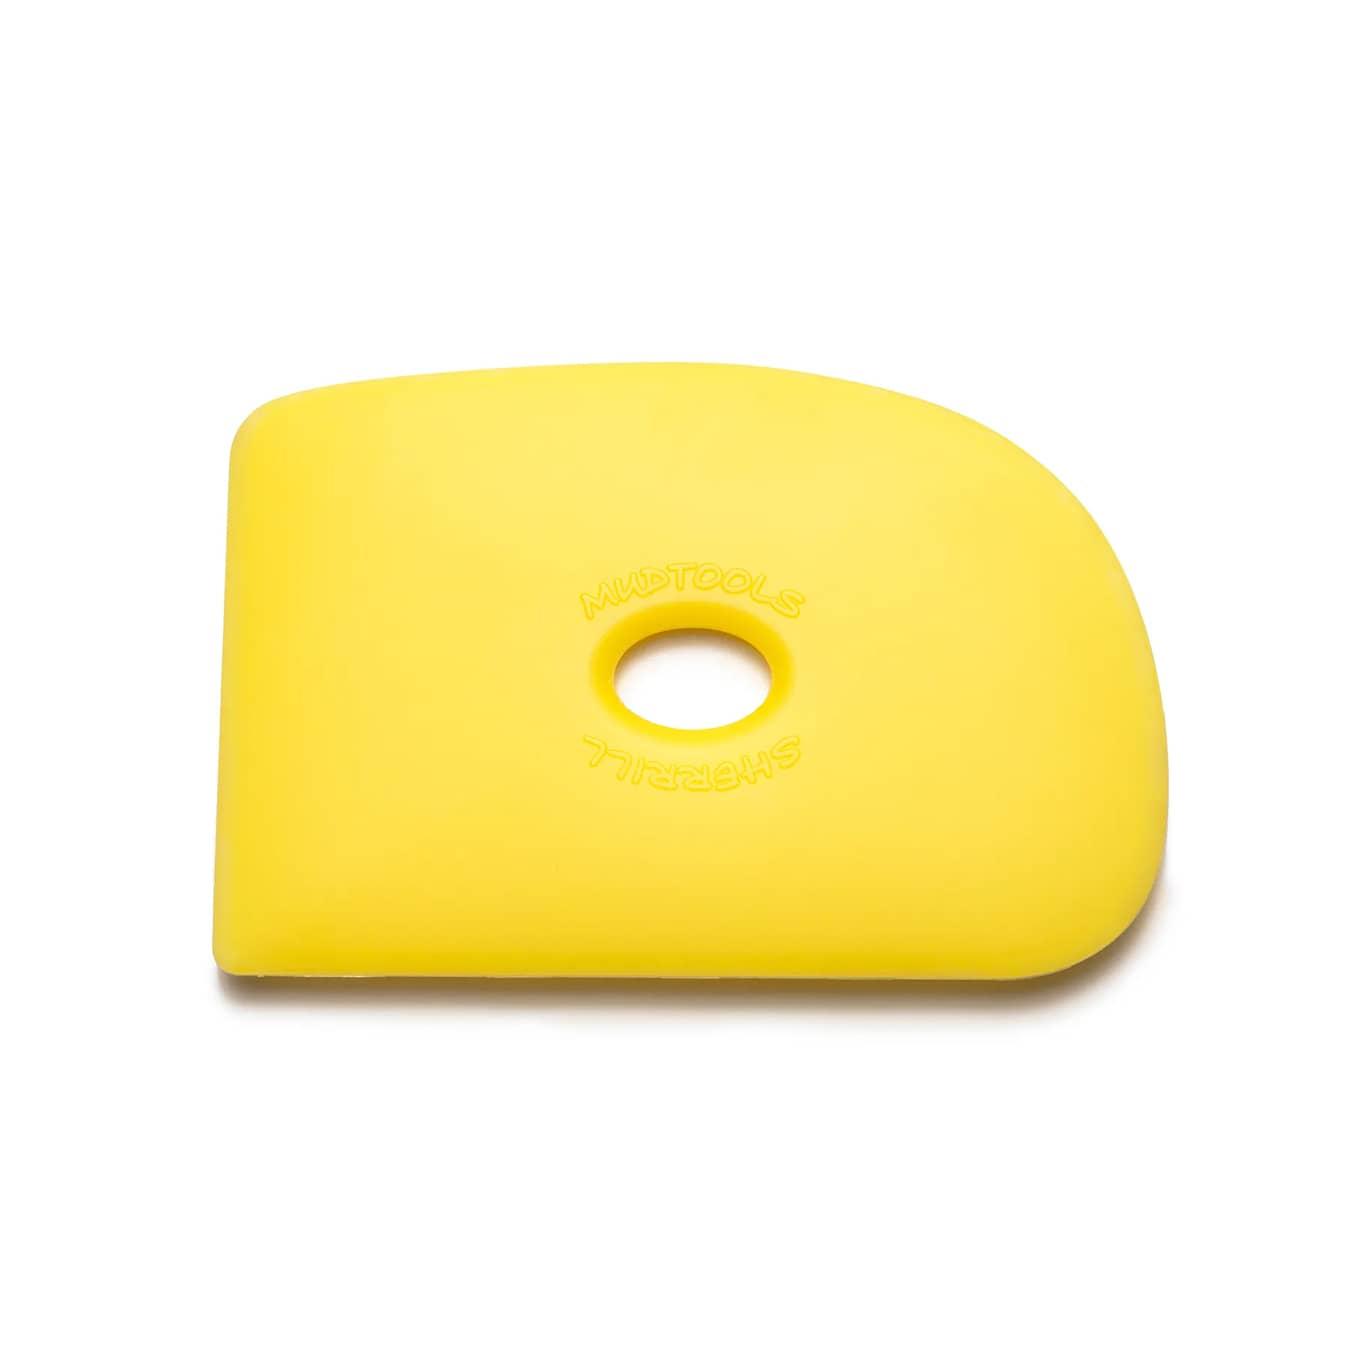 Mudtools Shape 2 Kidney – Yellow (Soft)